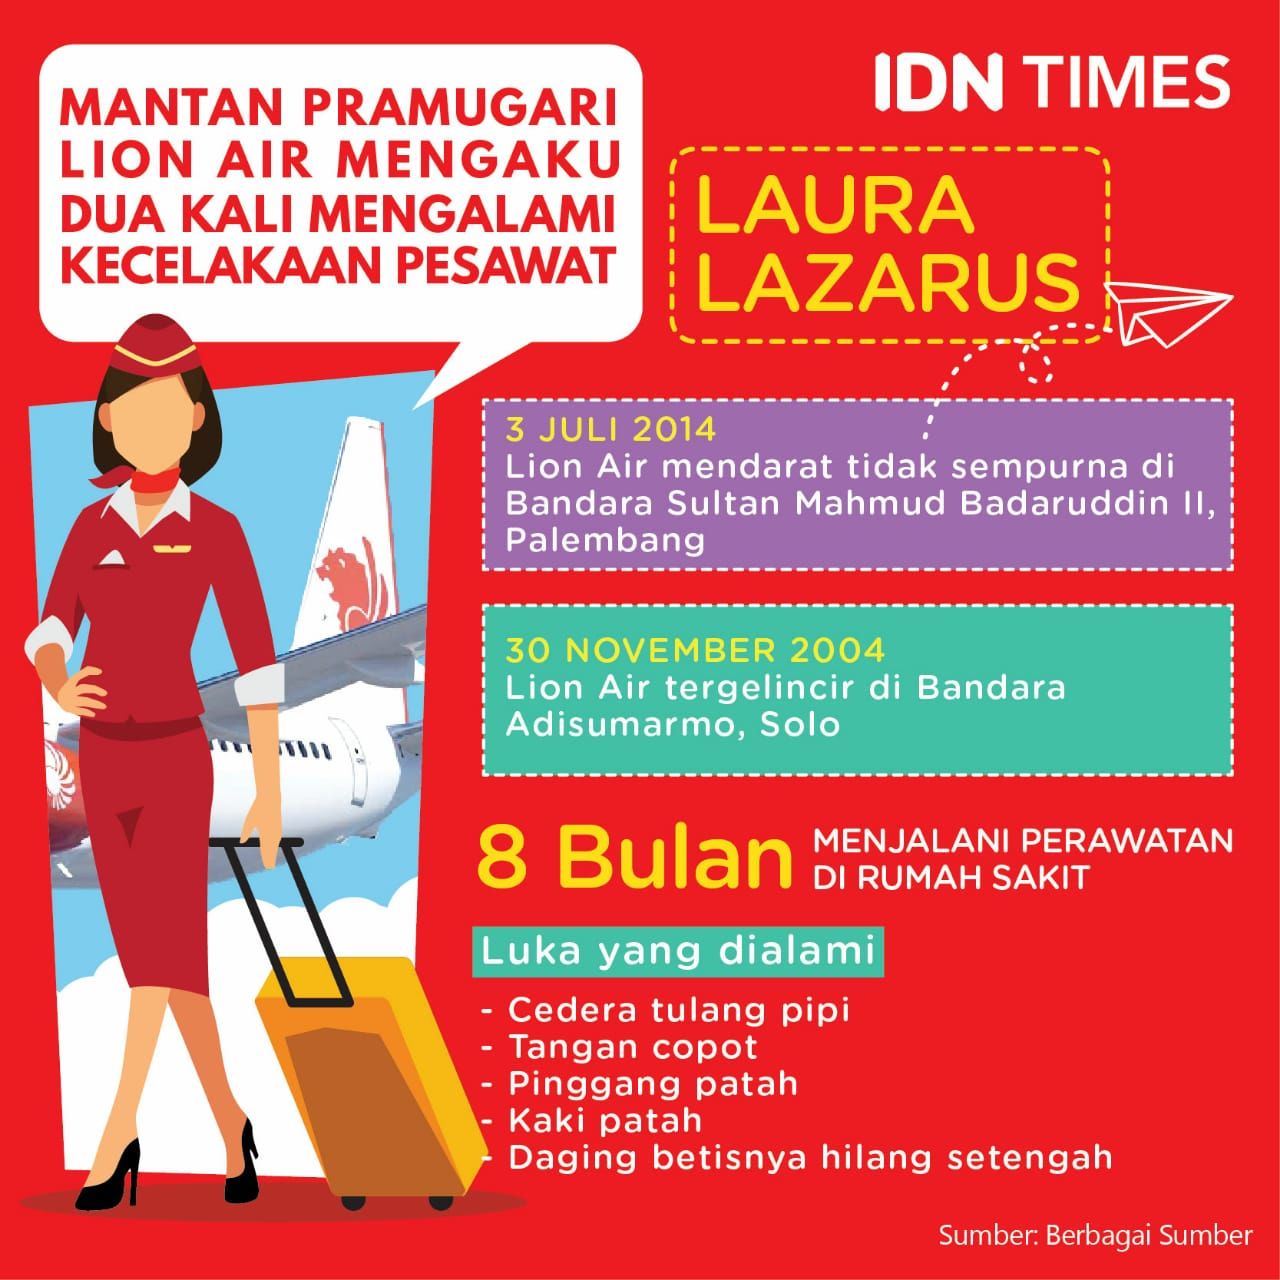 Curhatan Mantan Pramugari Lion Air, 2 Kali Kecelakaan